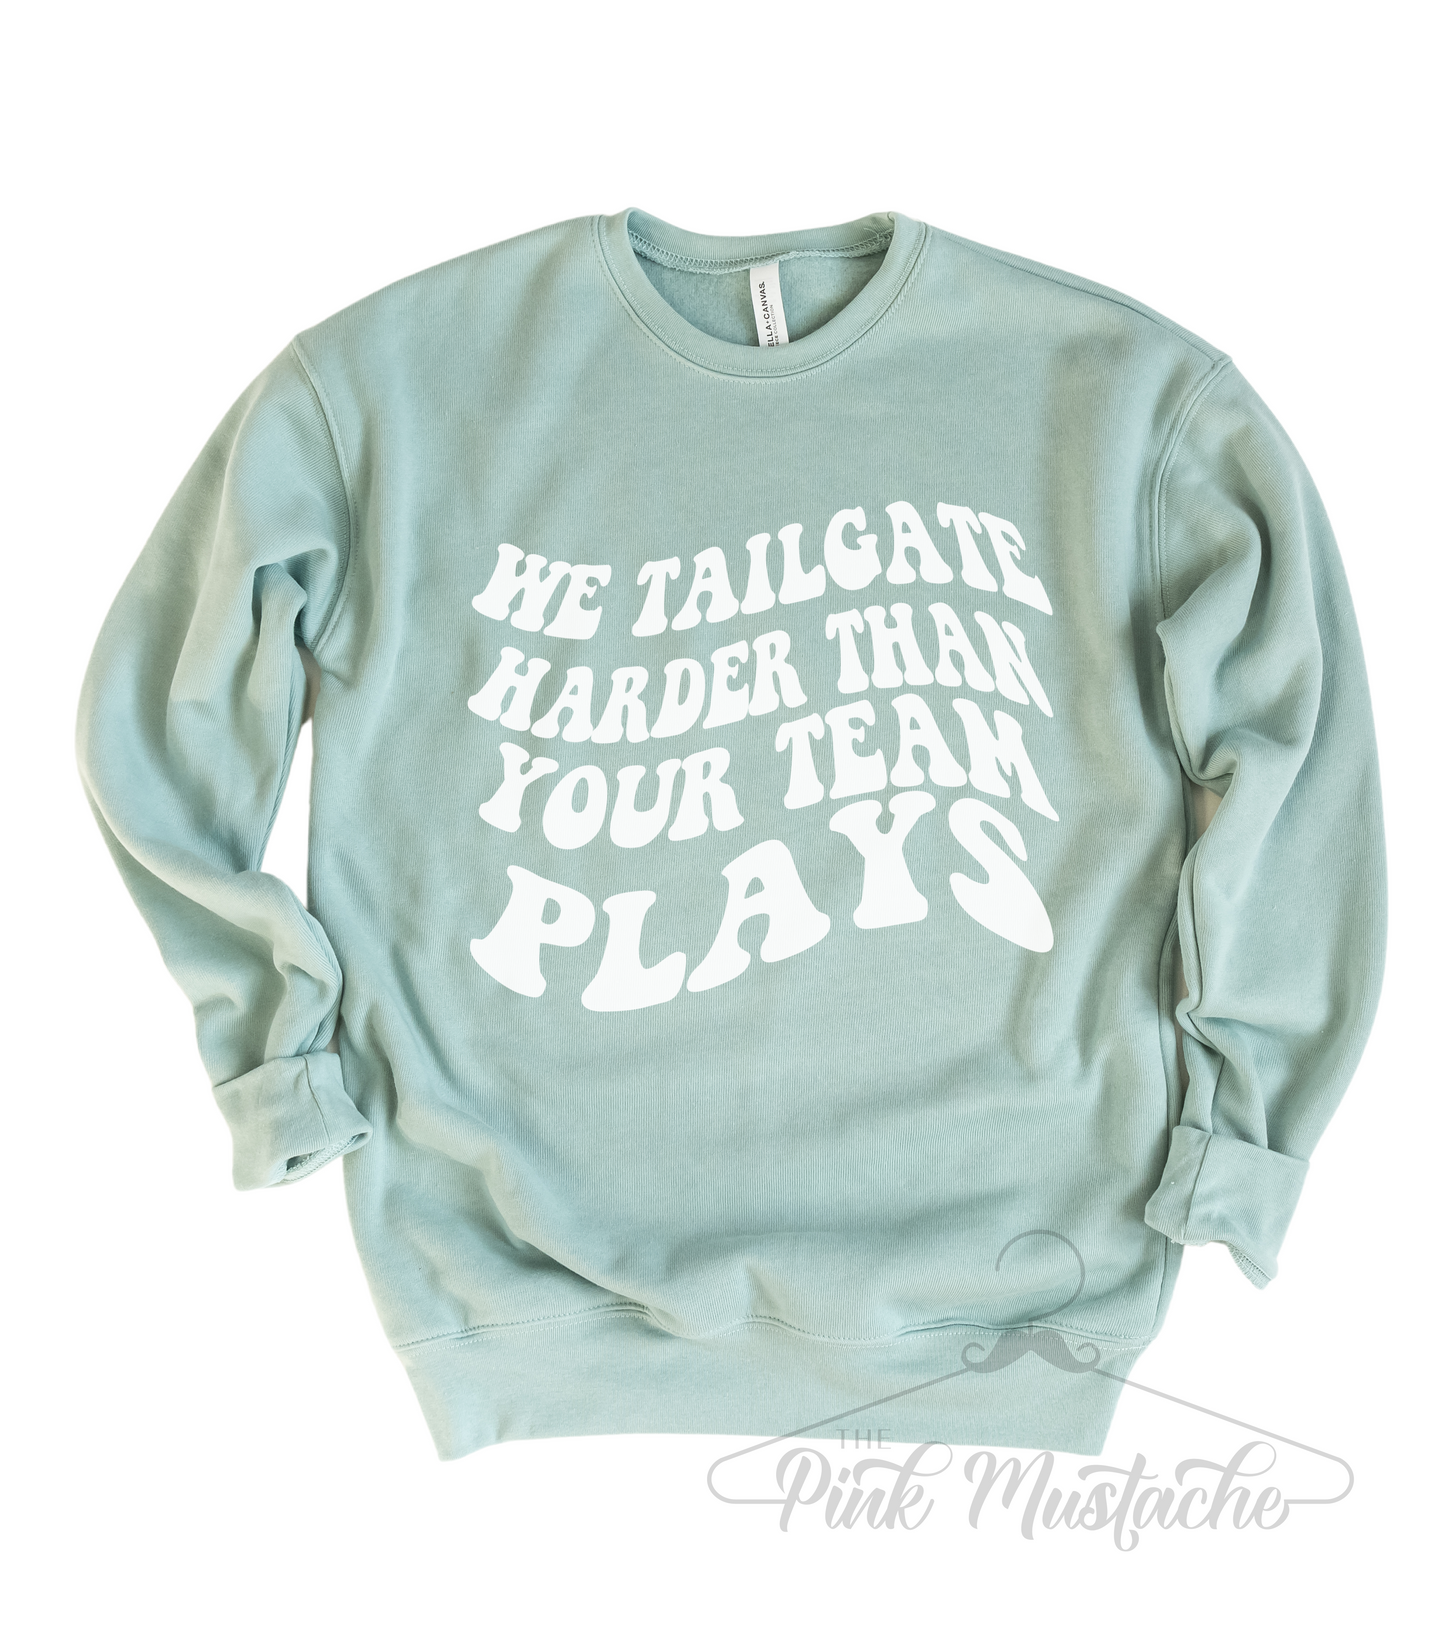 We Tailgate Harder Than Your Team Plays/ BELLA Soft Style Sweatshirt - Quality Sweatshirt - Sweatshirt